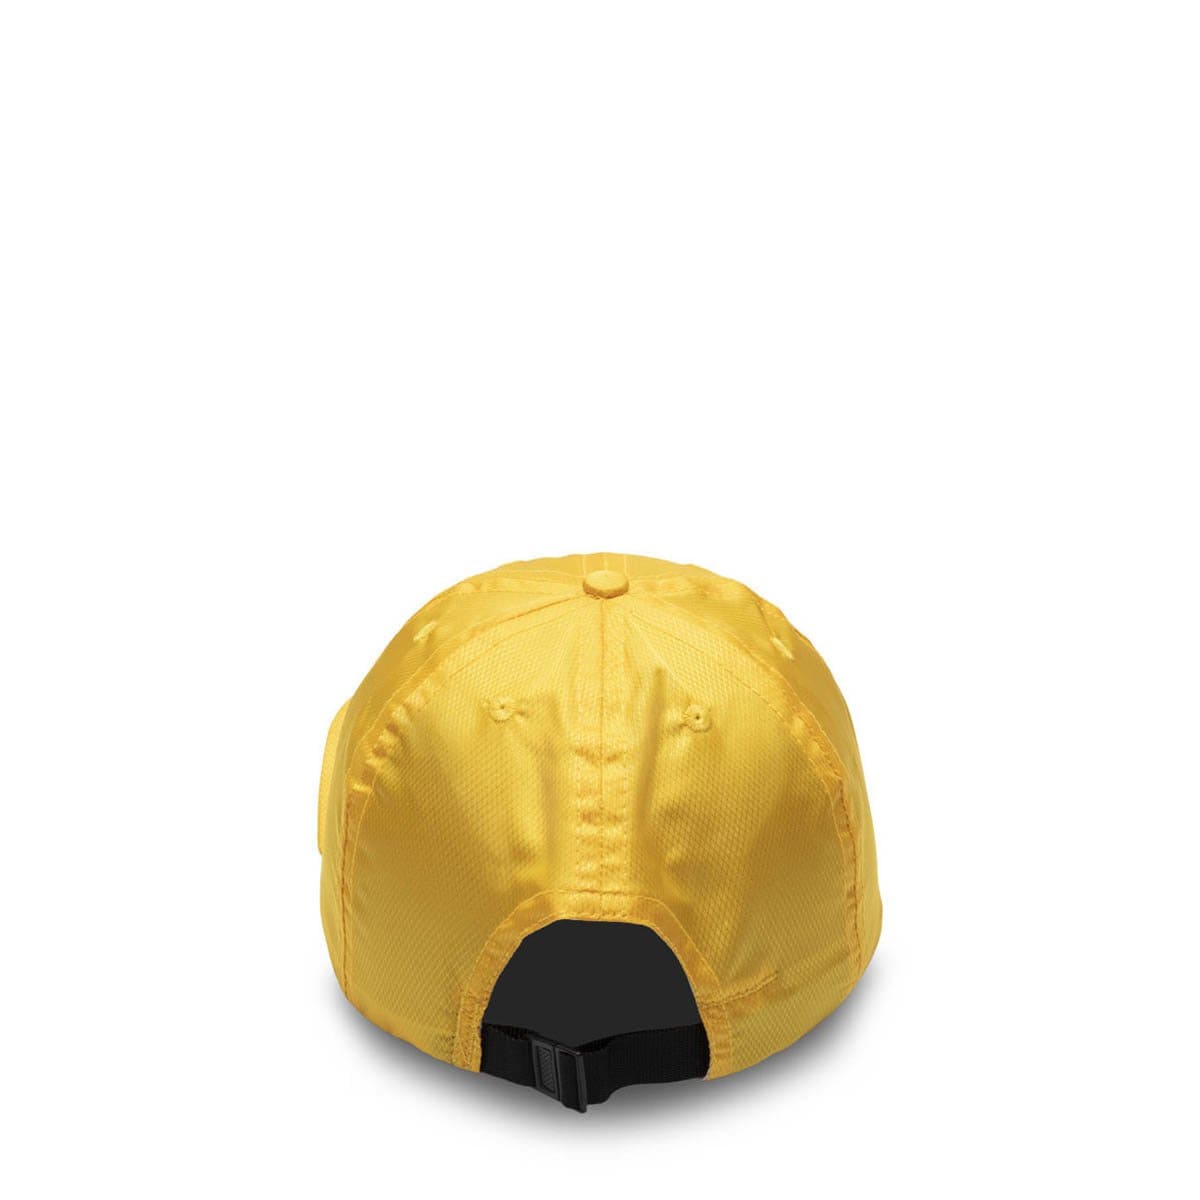 Powers Headwear GOLDEN YELLOW / O/S SUN NYLON 6-PANEL CAP